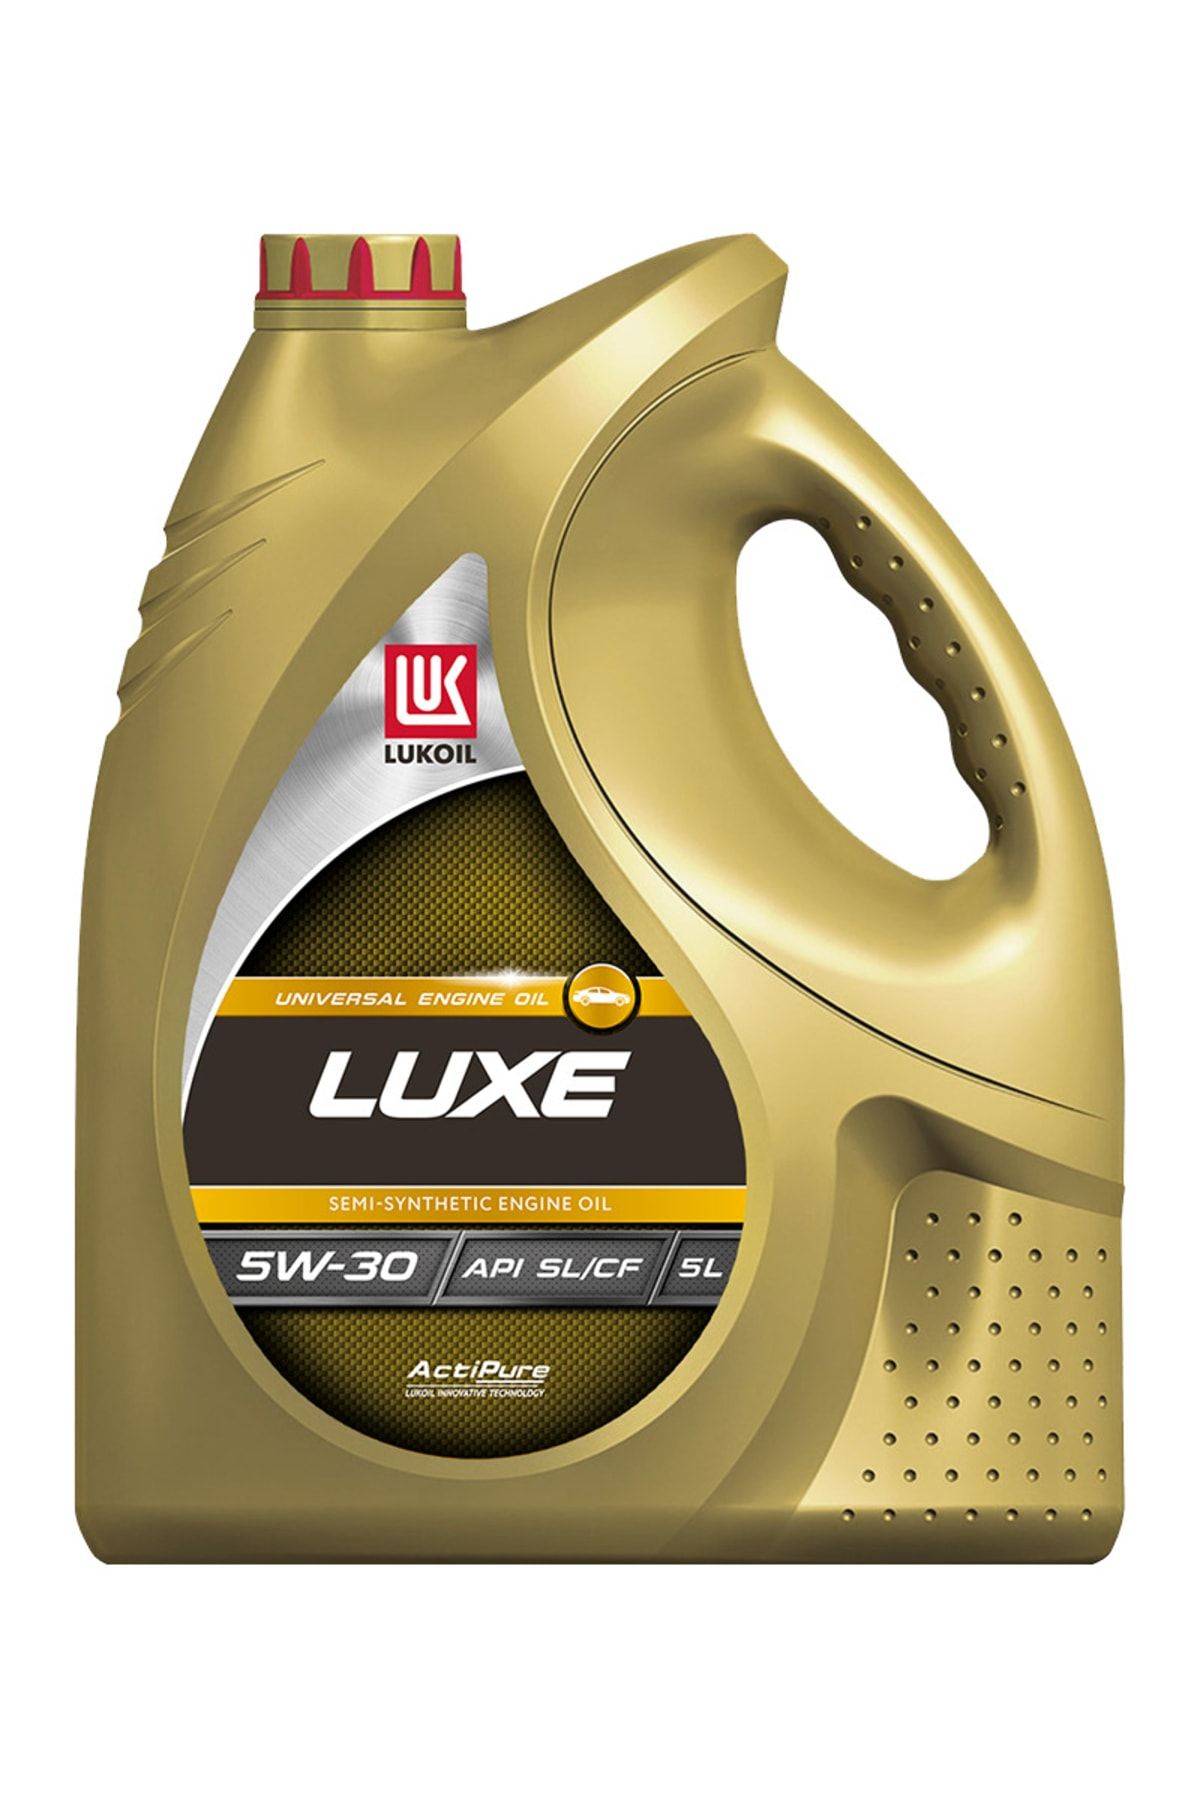 Масло 10w 40 api sl cf. Lukoil Luxe 10w-40. Масло Лукойл 10w 40 полусинтетика. Лукойл Люкс SAE 10w-40, API SL/CF 5 Л. Лукойл Luxe 10w 40 полусинтетика.